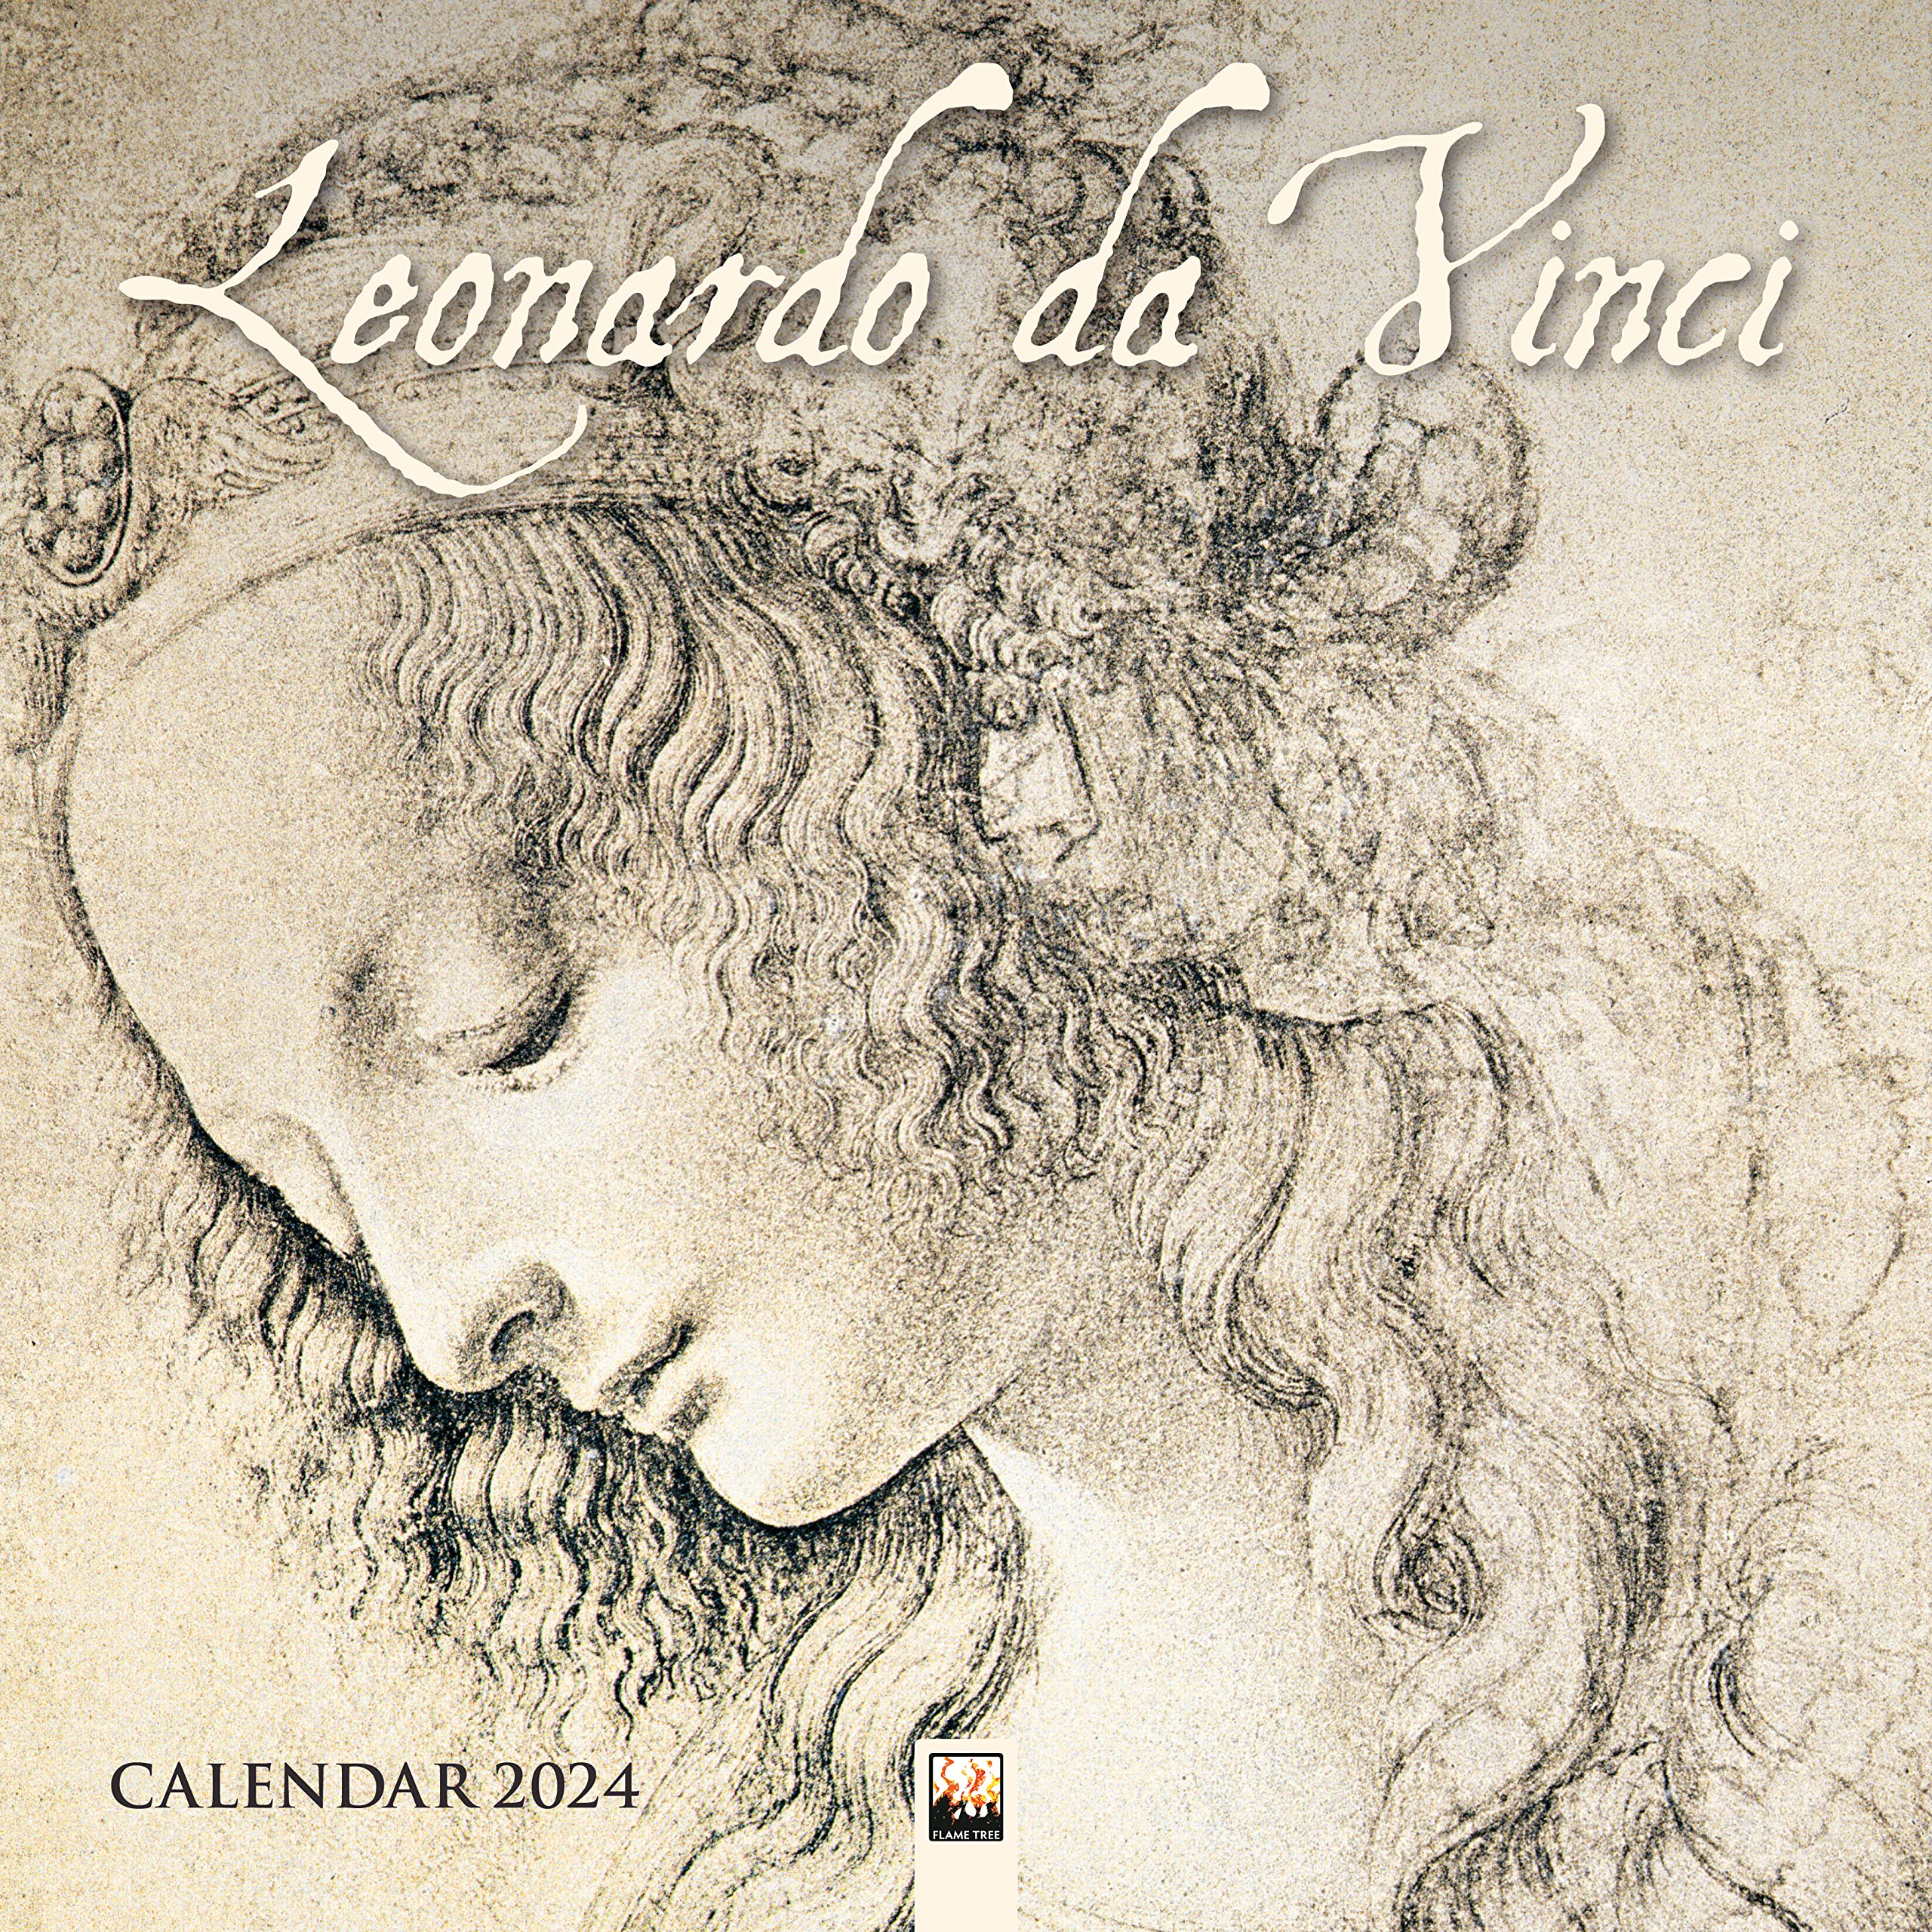 Calendar 2024 - Leonardo Da Vinci | Flame Tree Studio